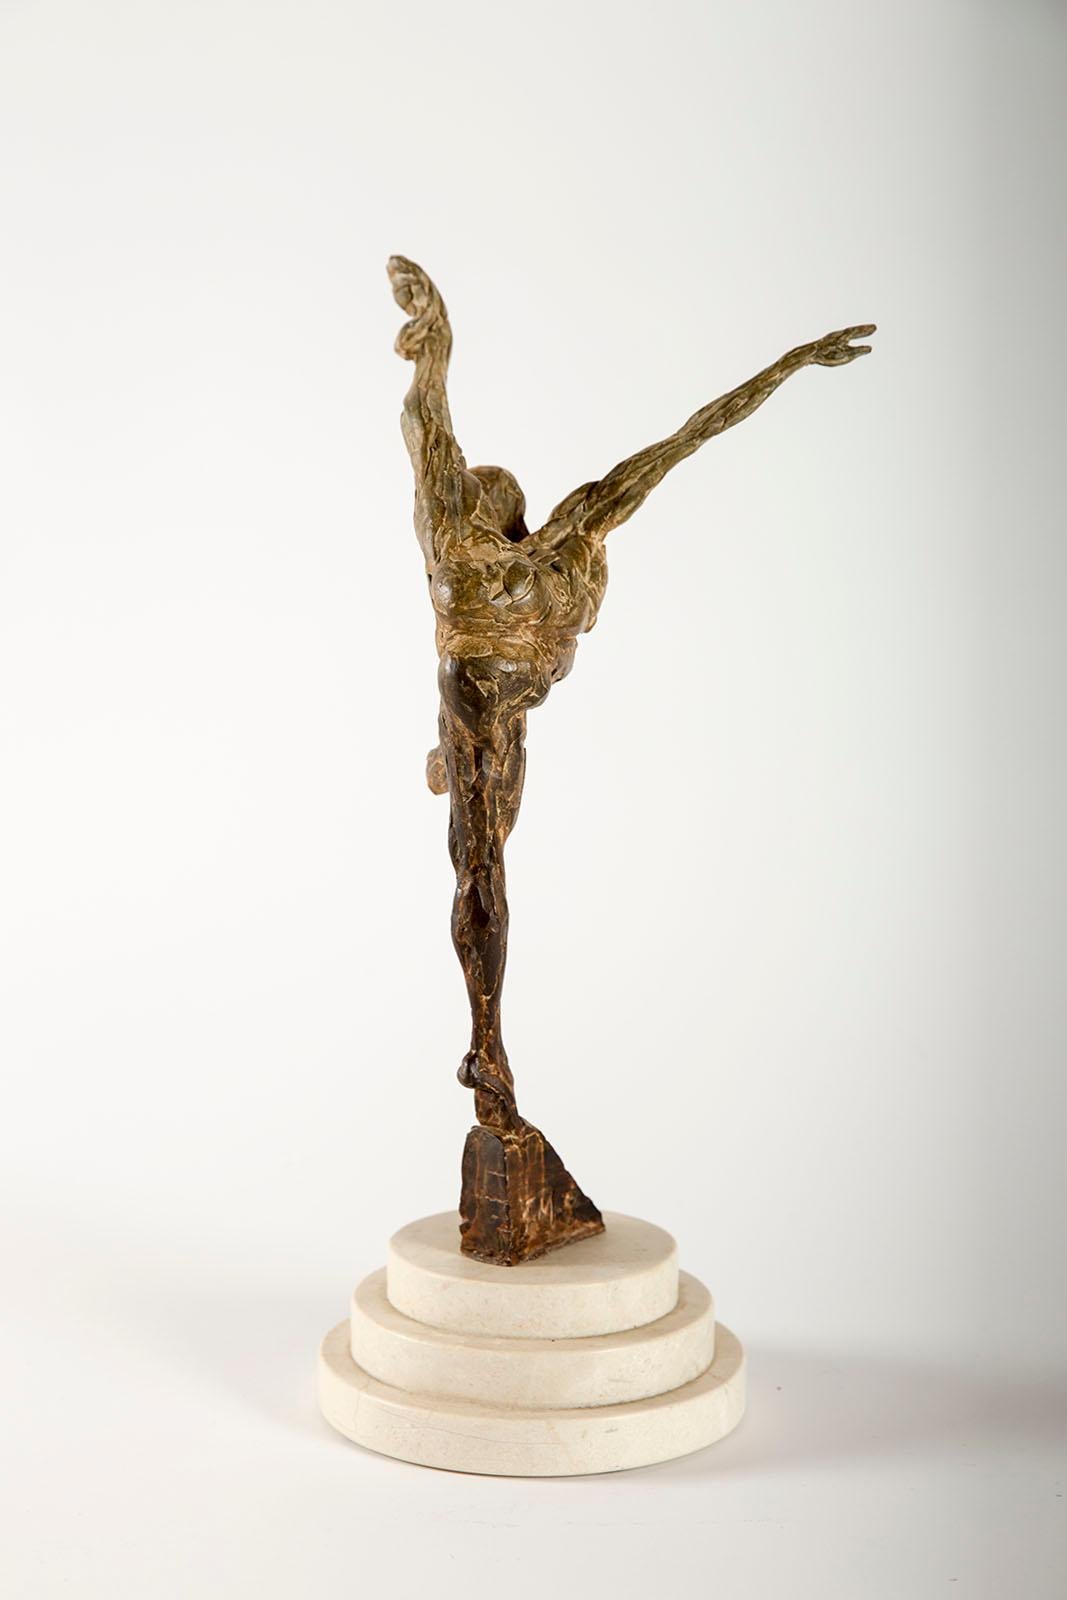 Richard Macdonald Chroma II bonze 1/8 life sculpture - Realist Sculpture by Leonardo Nierman